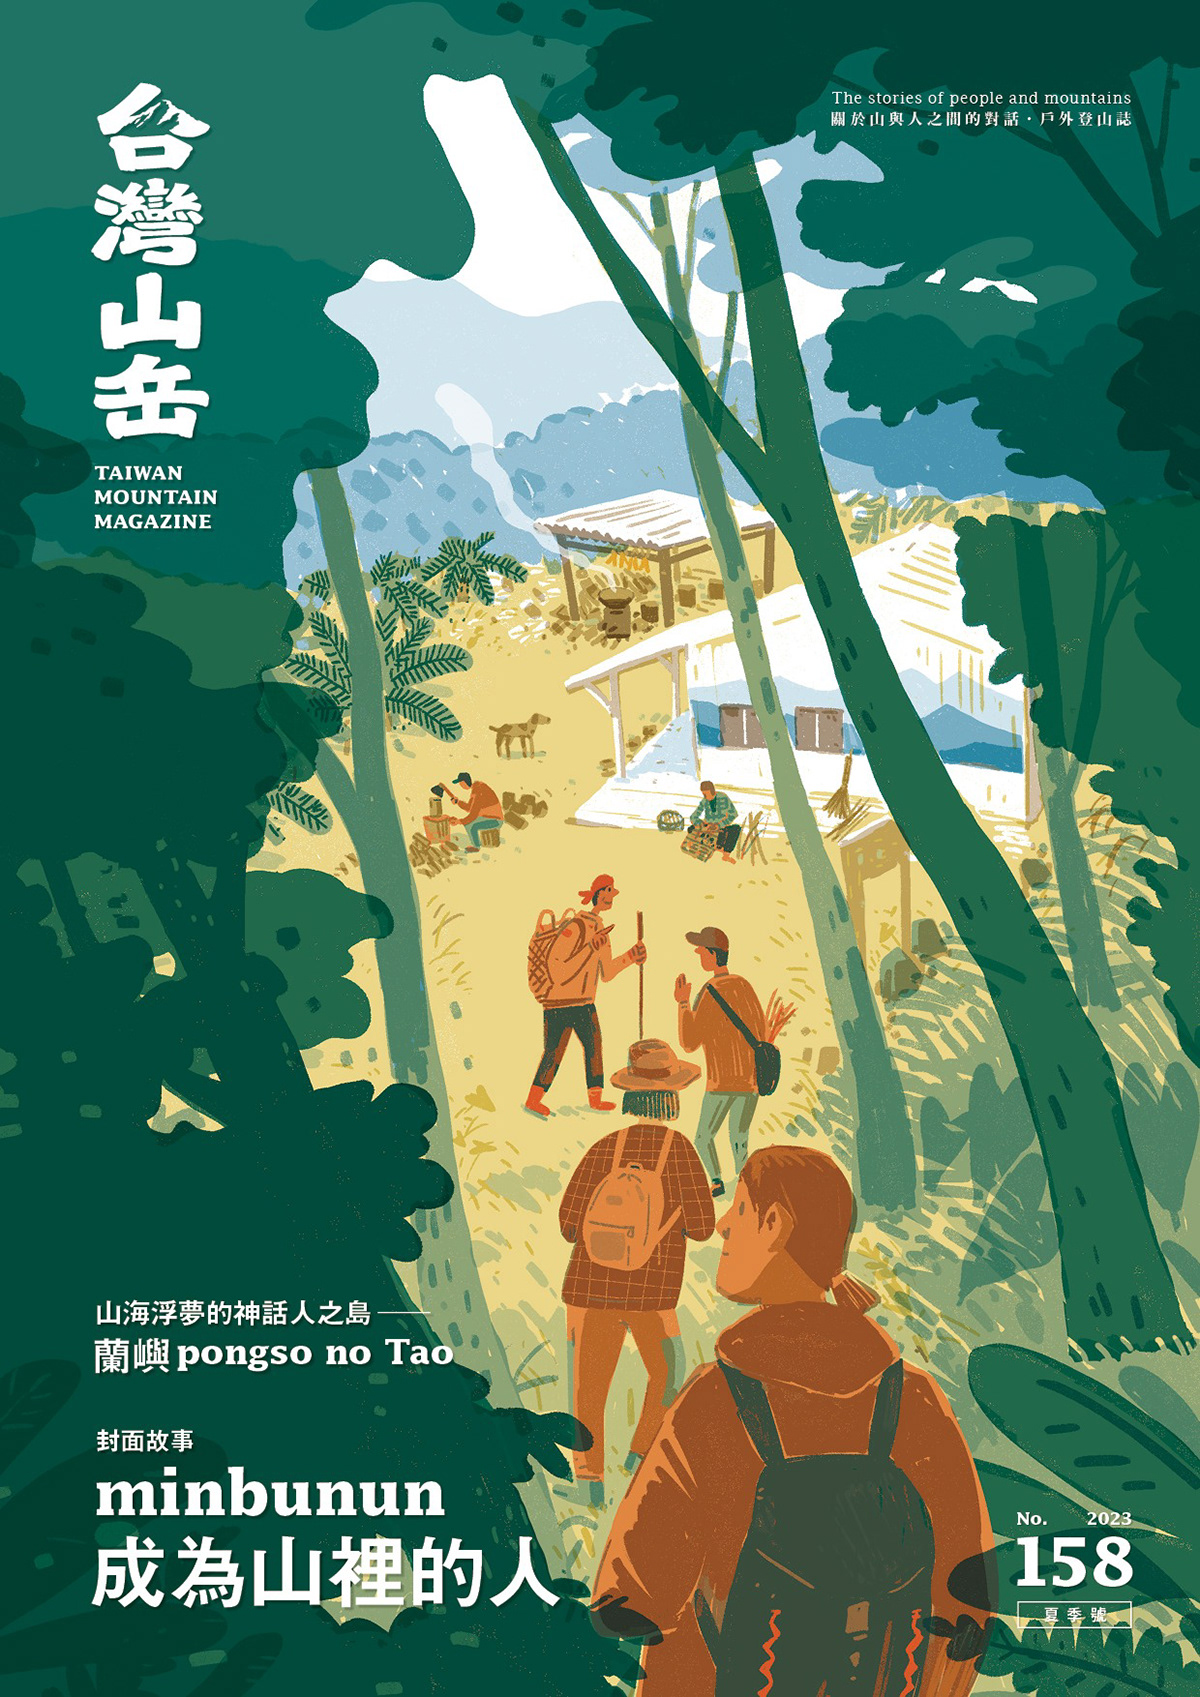 taiwan mountain magazine 登山 photoshop 插畫 插圖 電繪 台灣山岳雜誌 繪畫